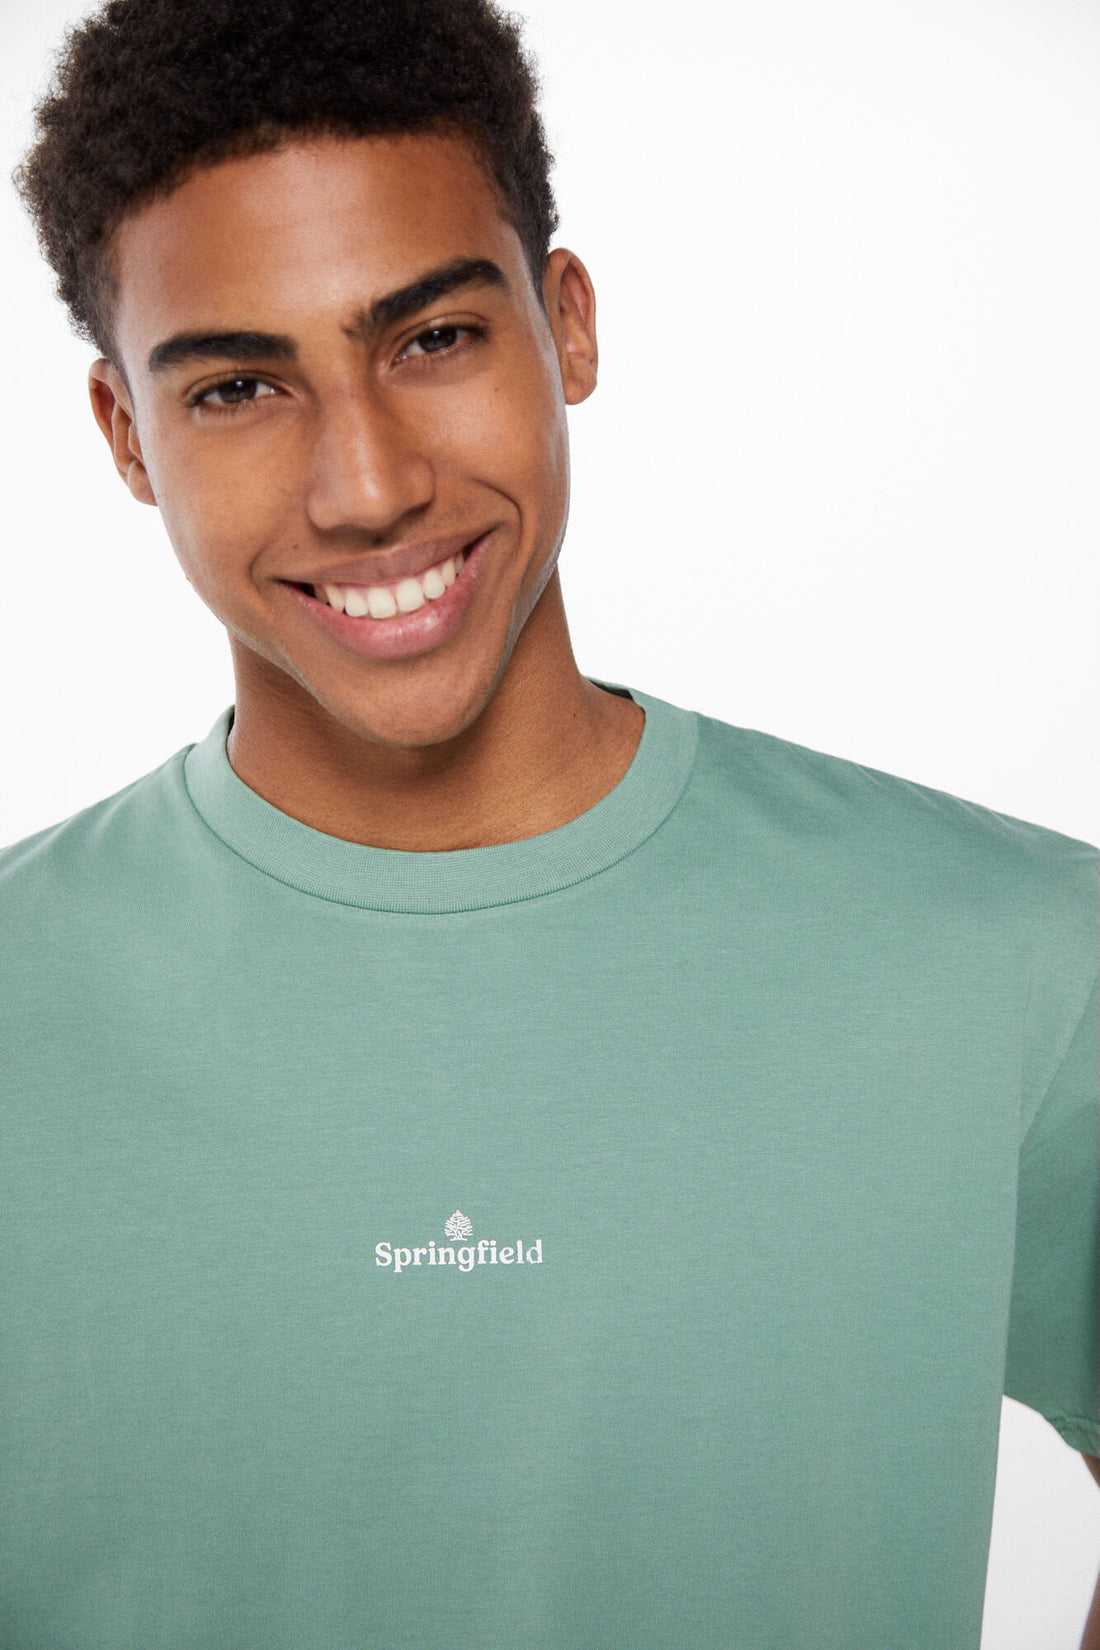 Basic T Shirt With Springfield Logo_0247061_27_02